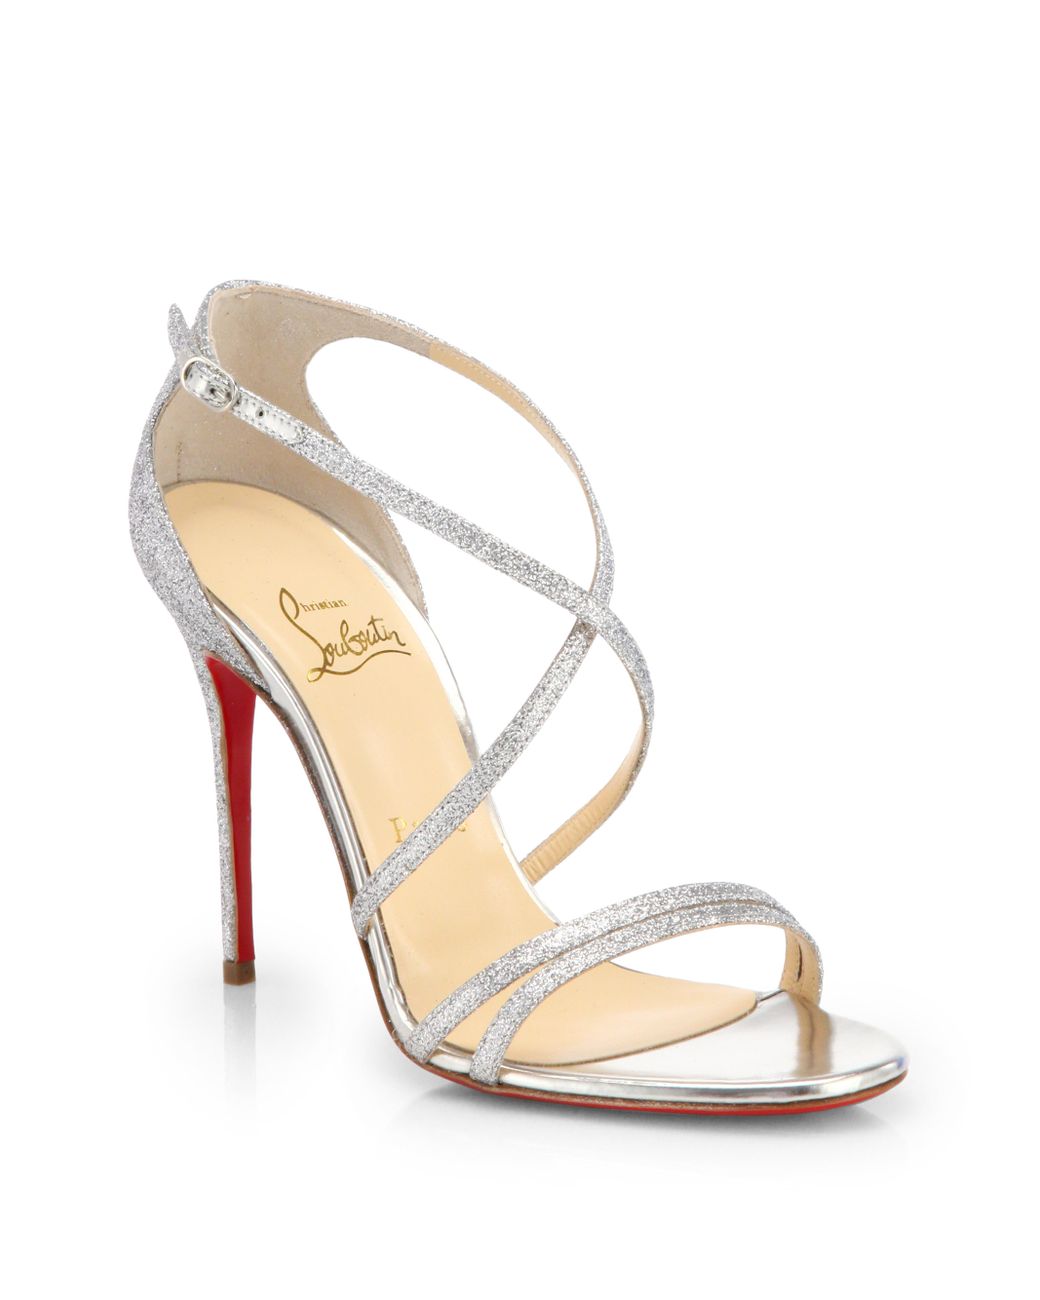 Christian Louboutin Gwynitta Glitter Sandals in Metallic | Lyst